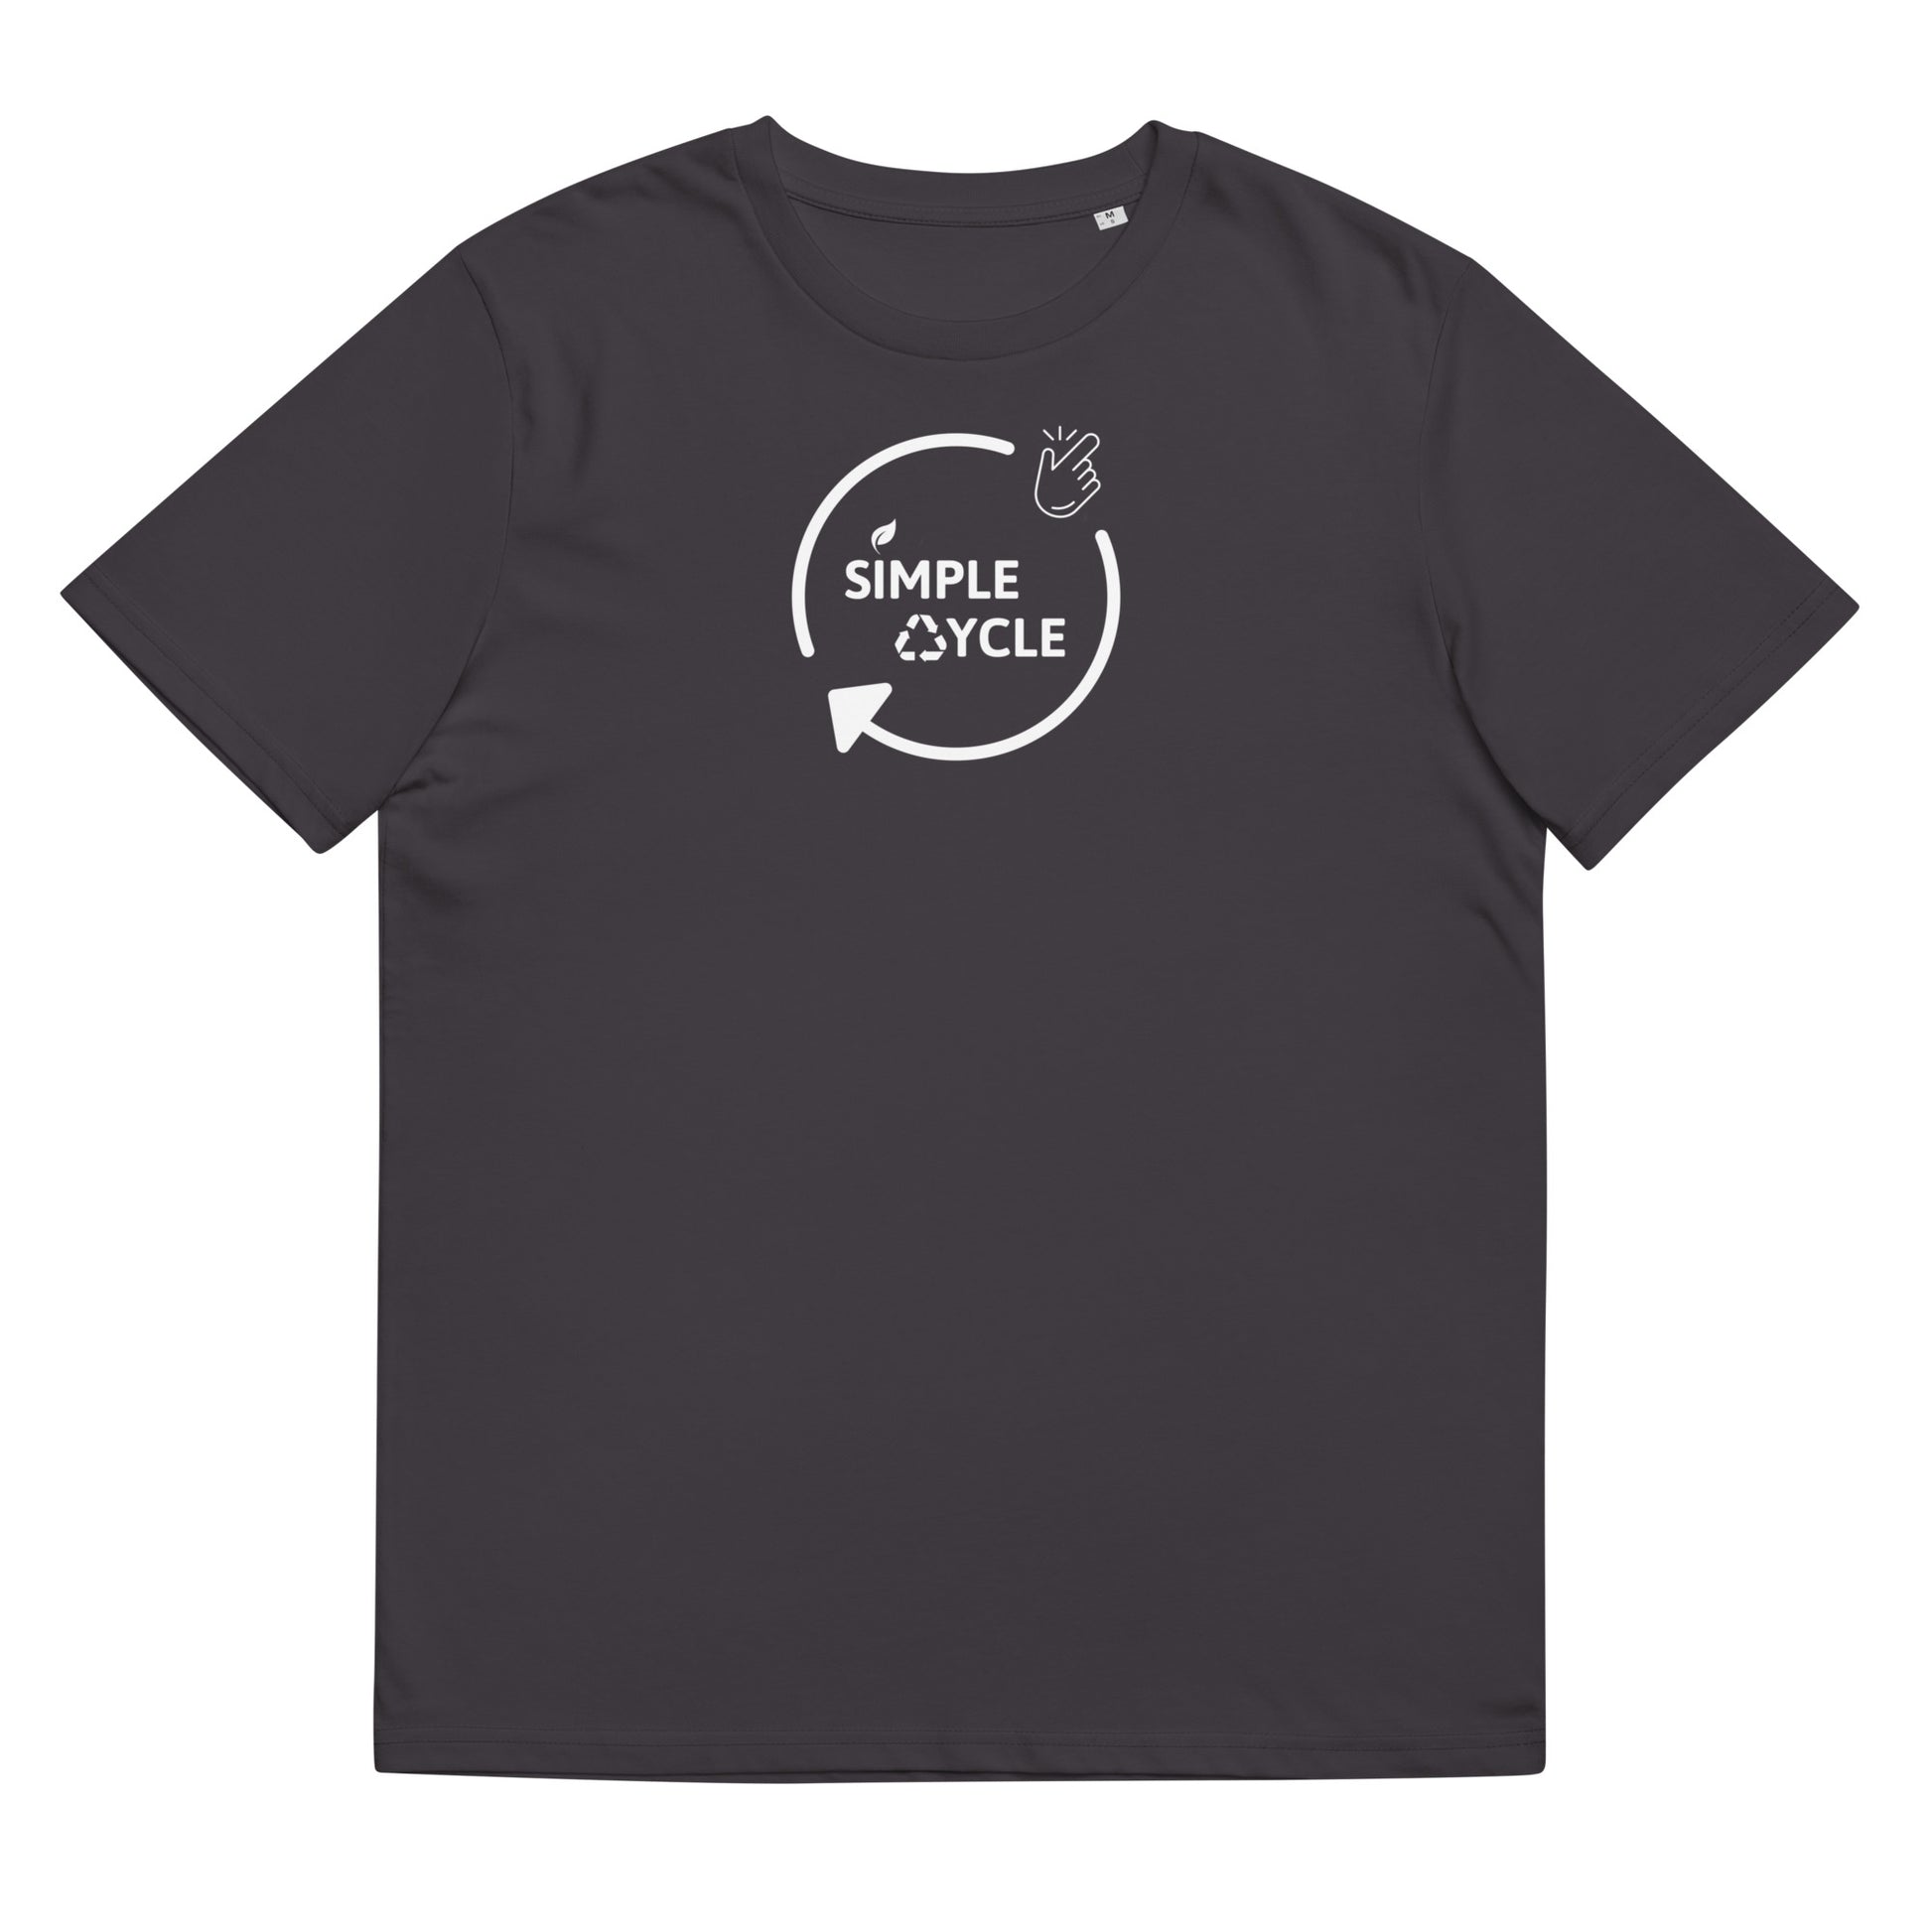 SimpleCycle Unisex Organic Cotton T-Shirt grey